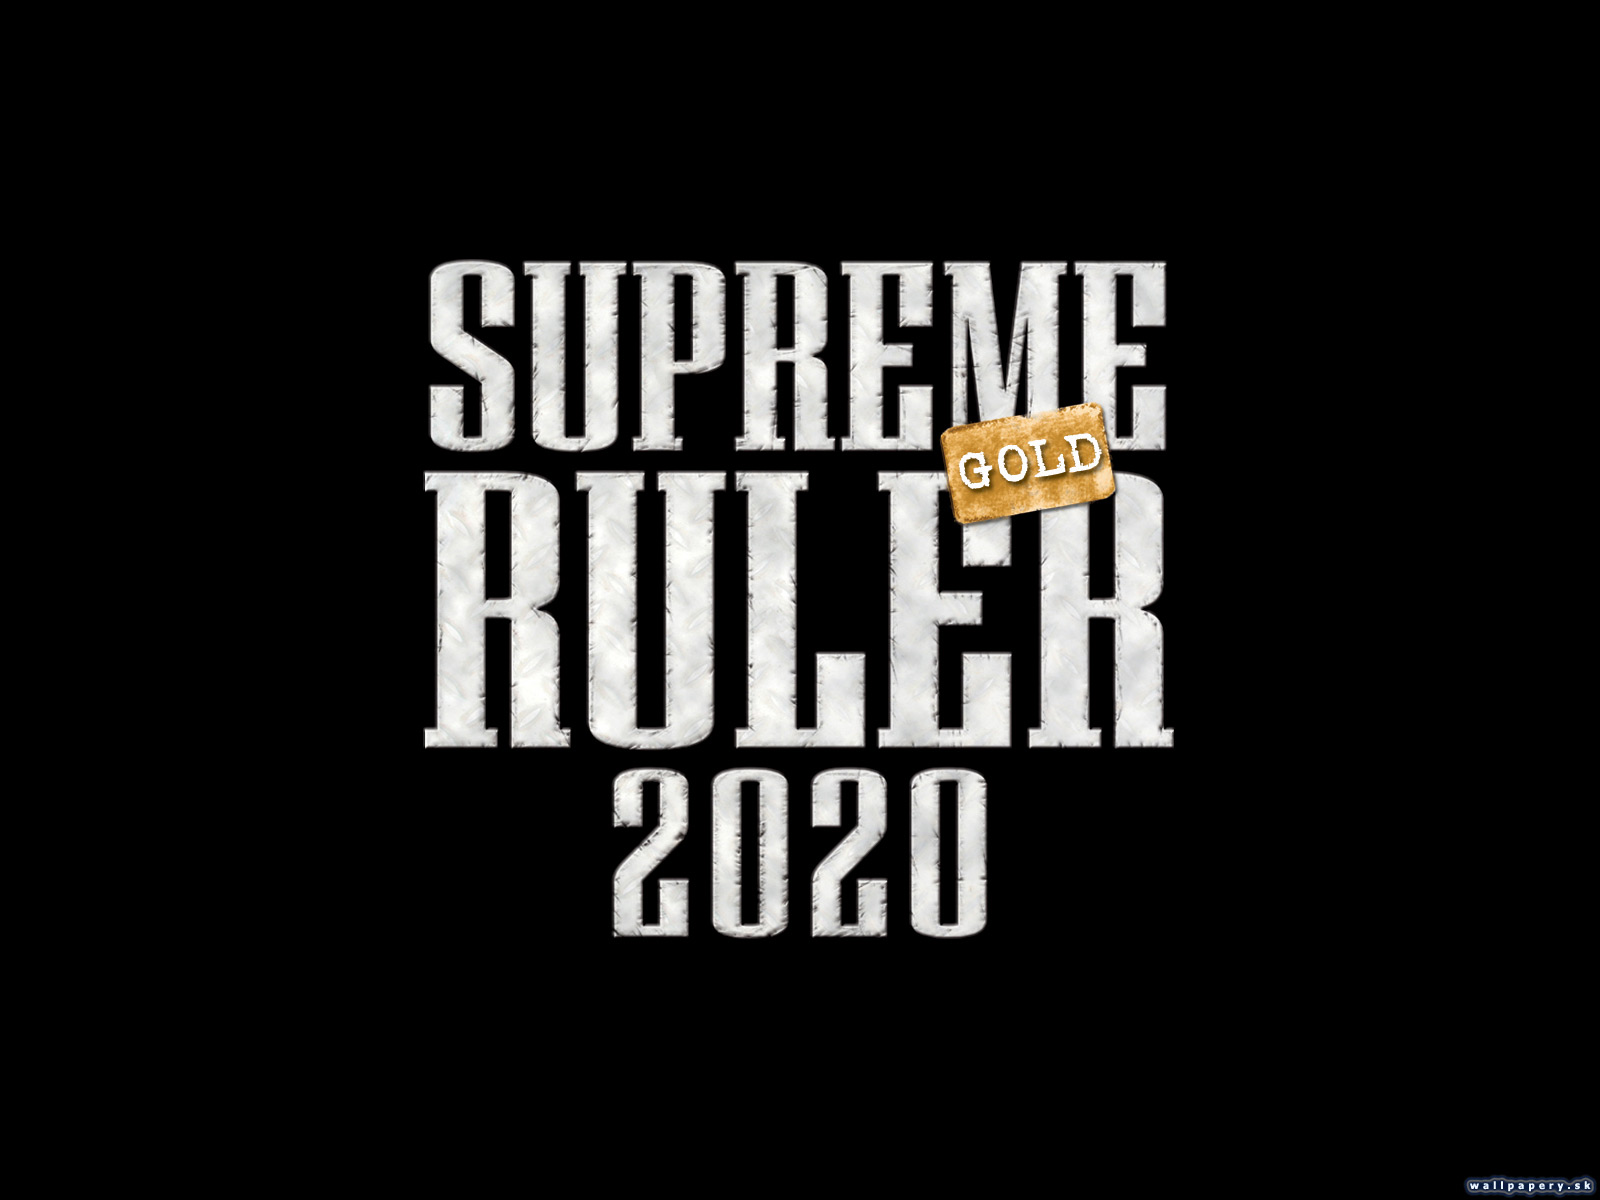 Supreme Ruler 2020: GOLD - wallpaper 3